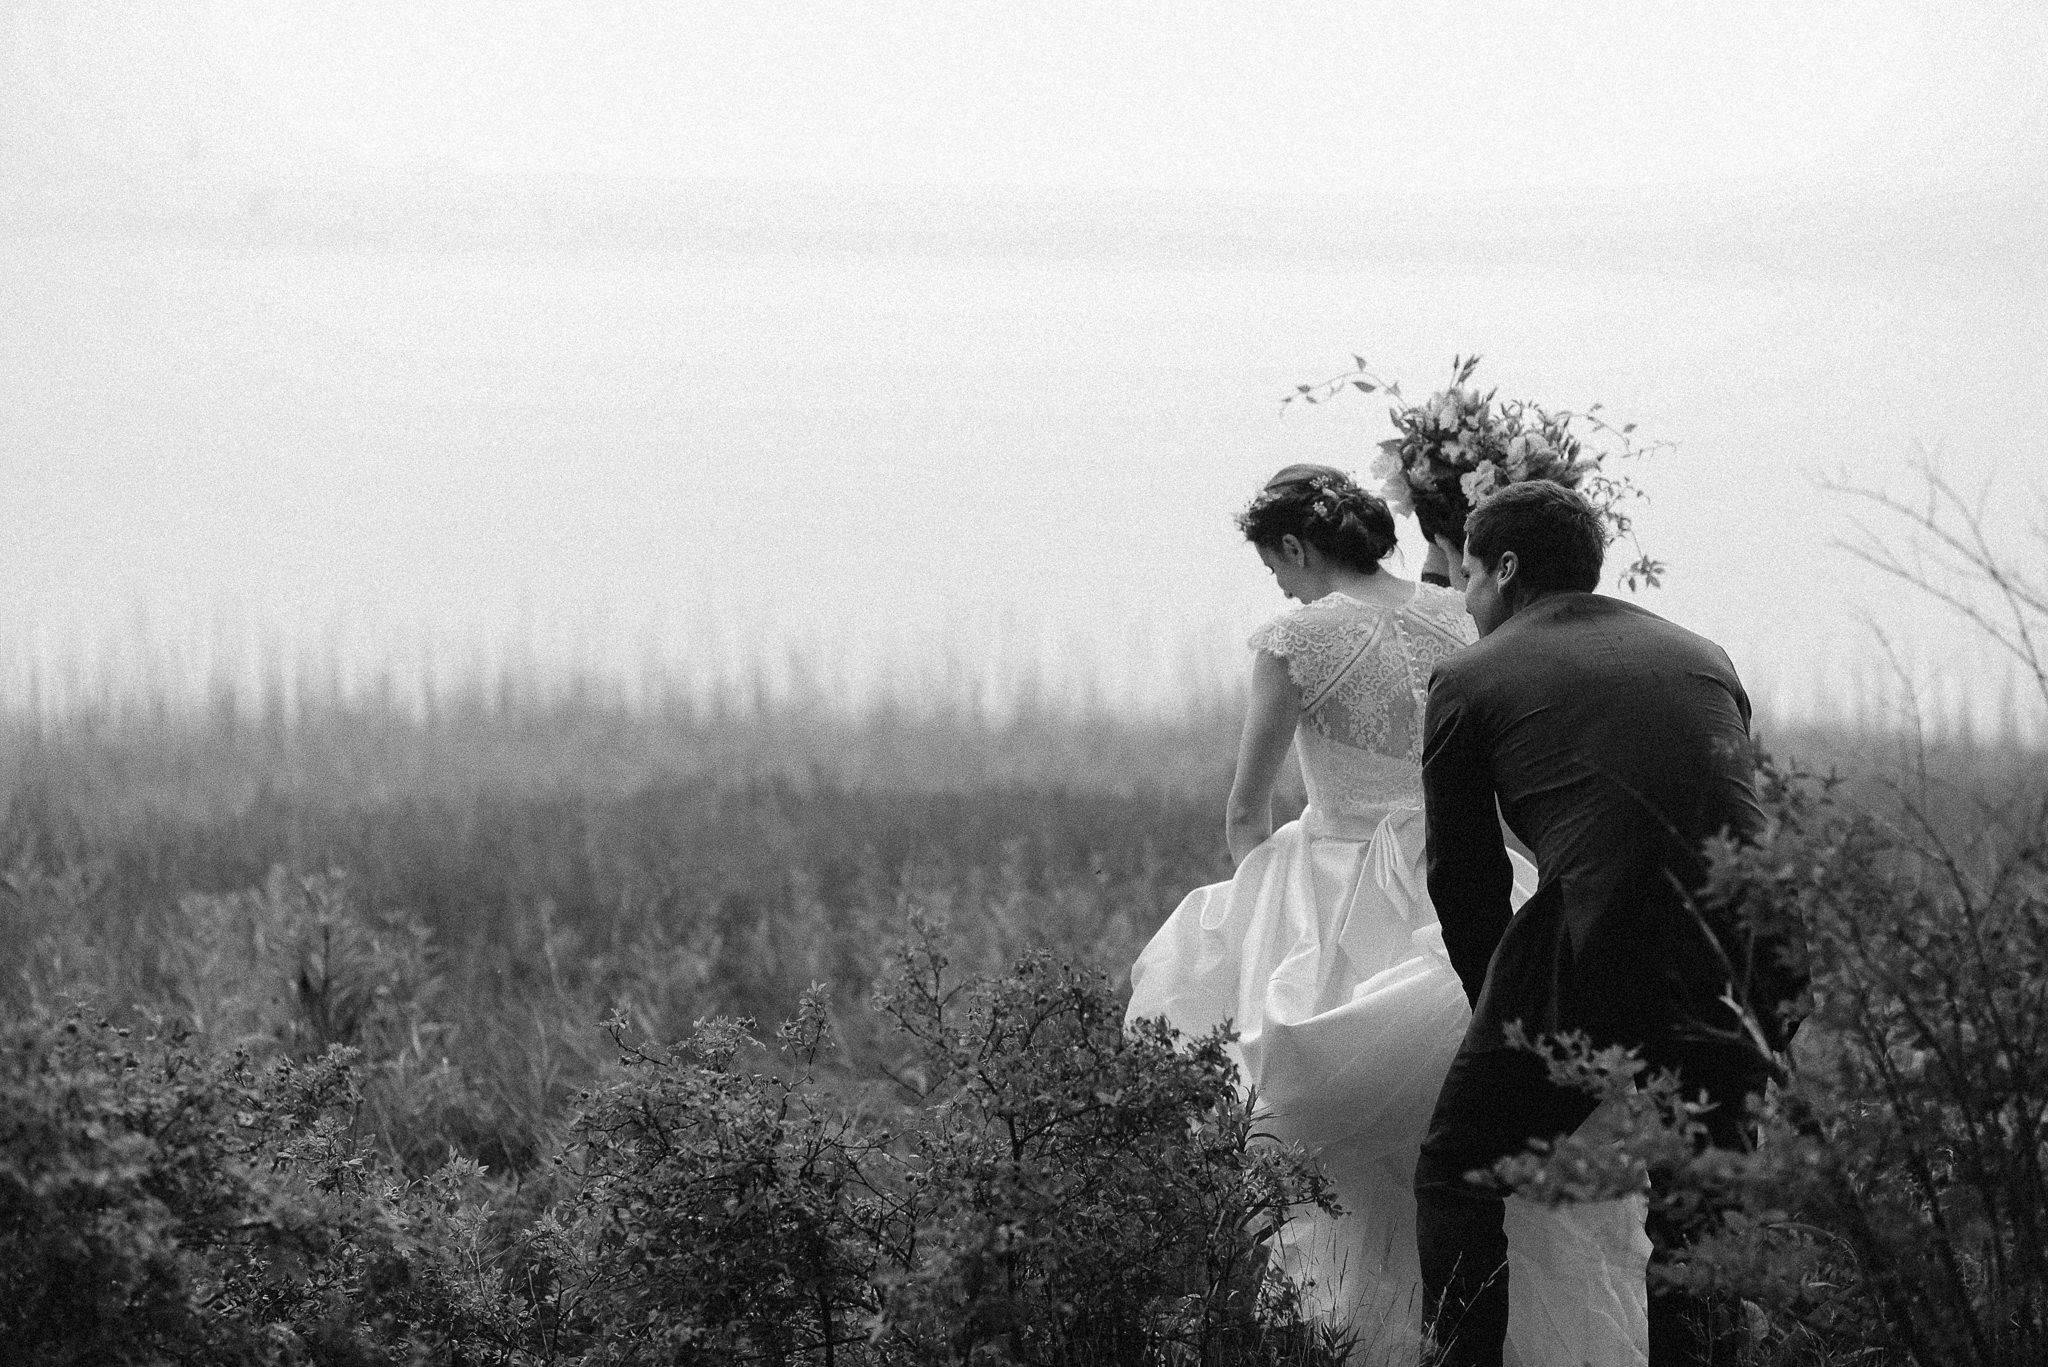 foggy coastal maine wedding backyard wedding freeport, me lindsay hackney